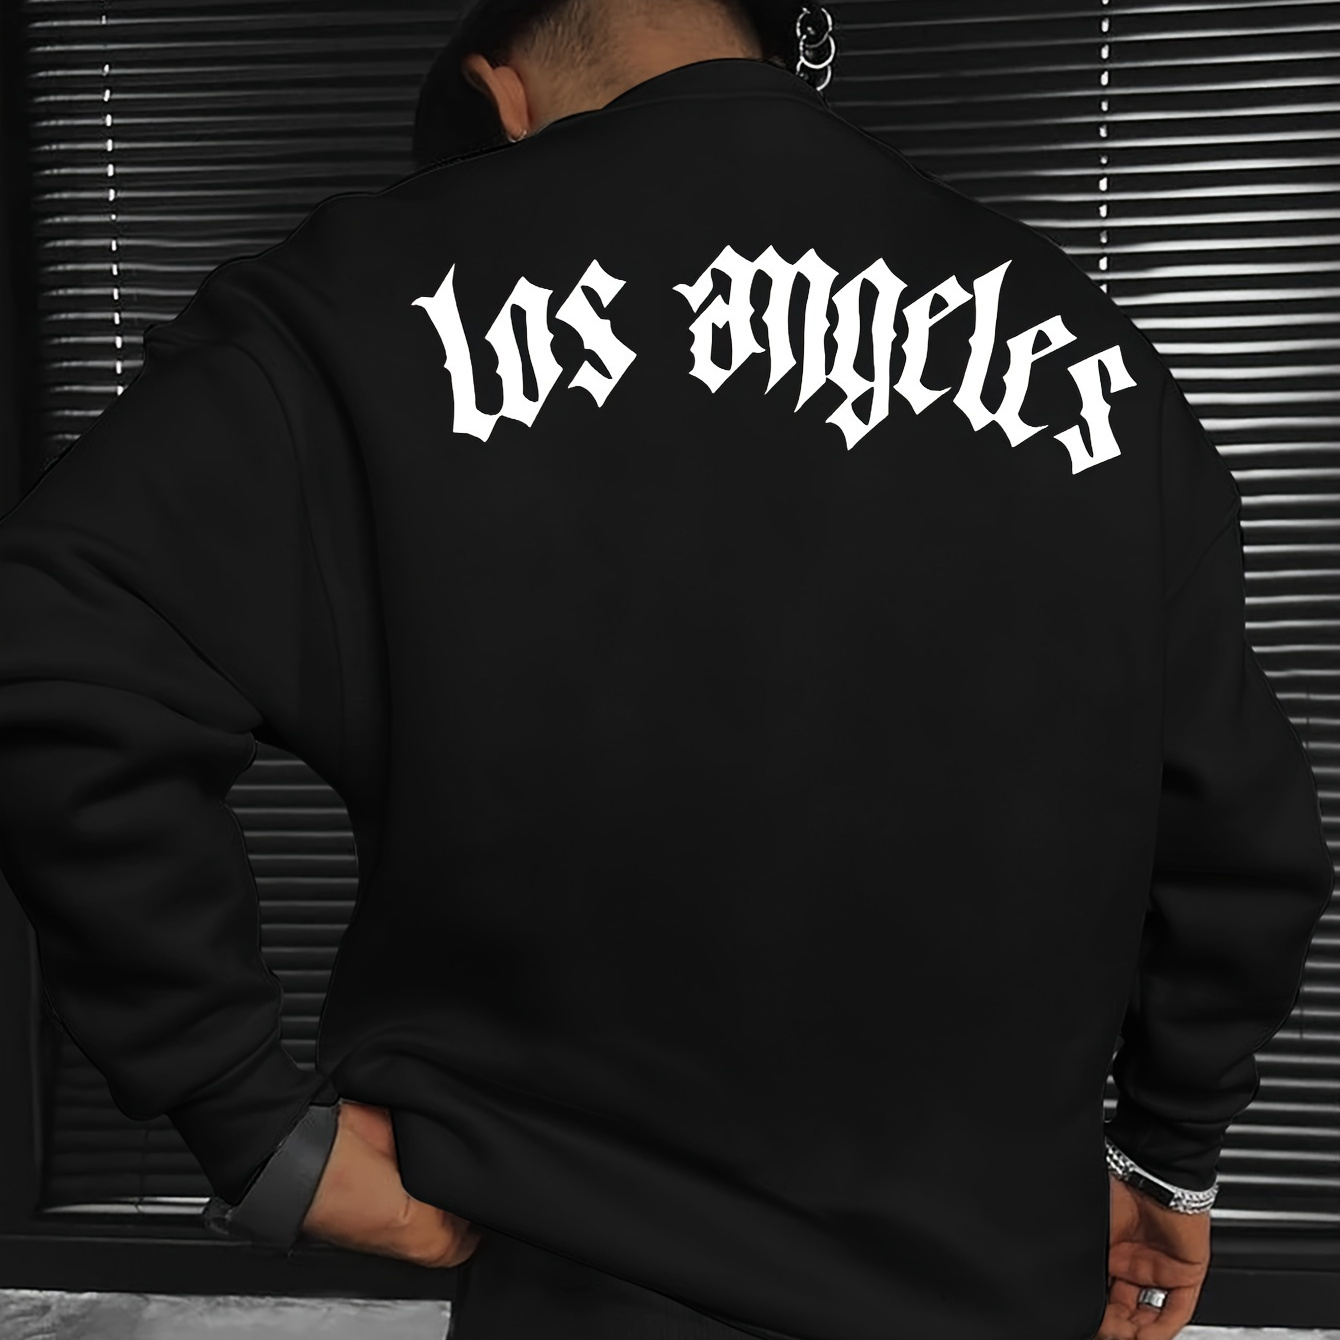 

Los Angeles Letter Print Men's Long Sleeve Crew Neck Sweatshirt, Trendy Pullover Sweatshirt, Casual Comfortable Versatile Top For Spring & Autumn, Outdoor Sports